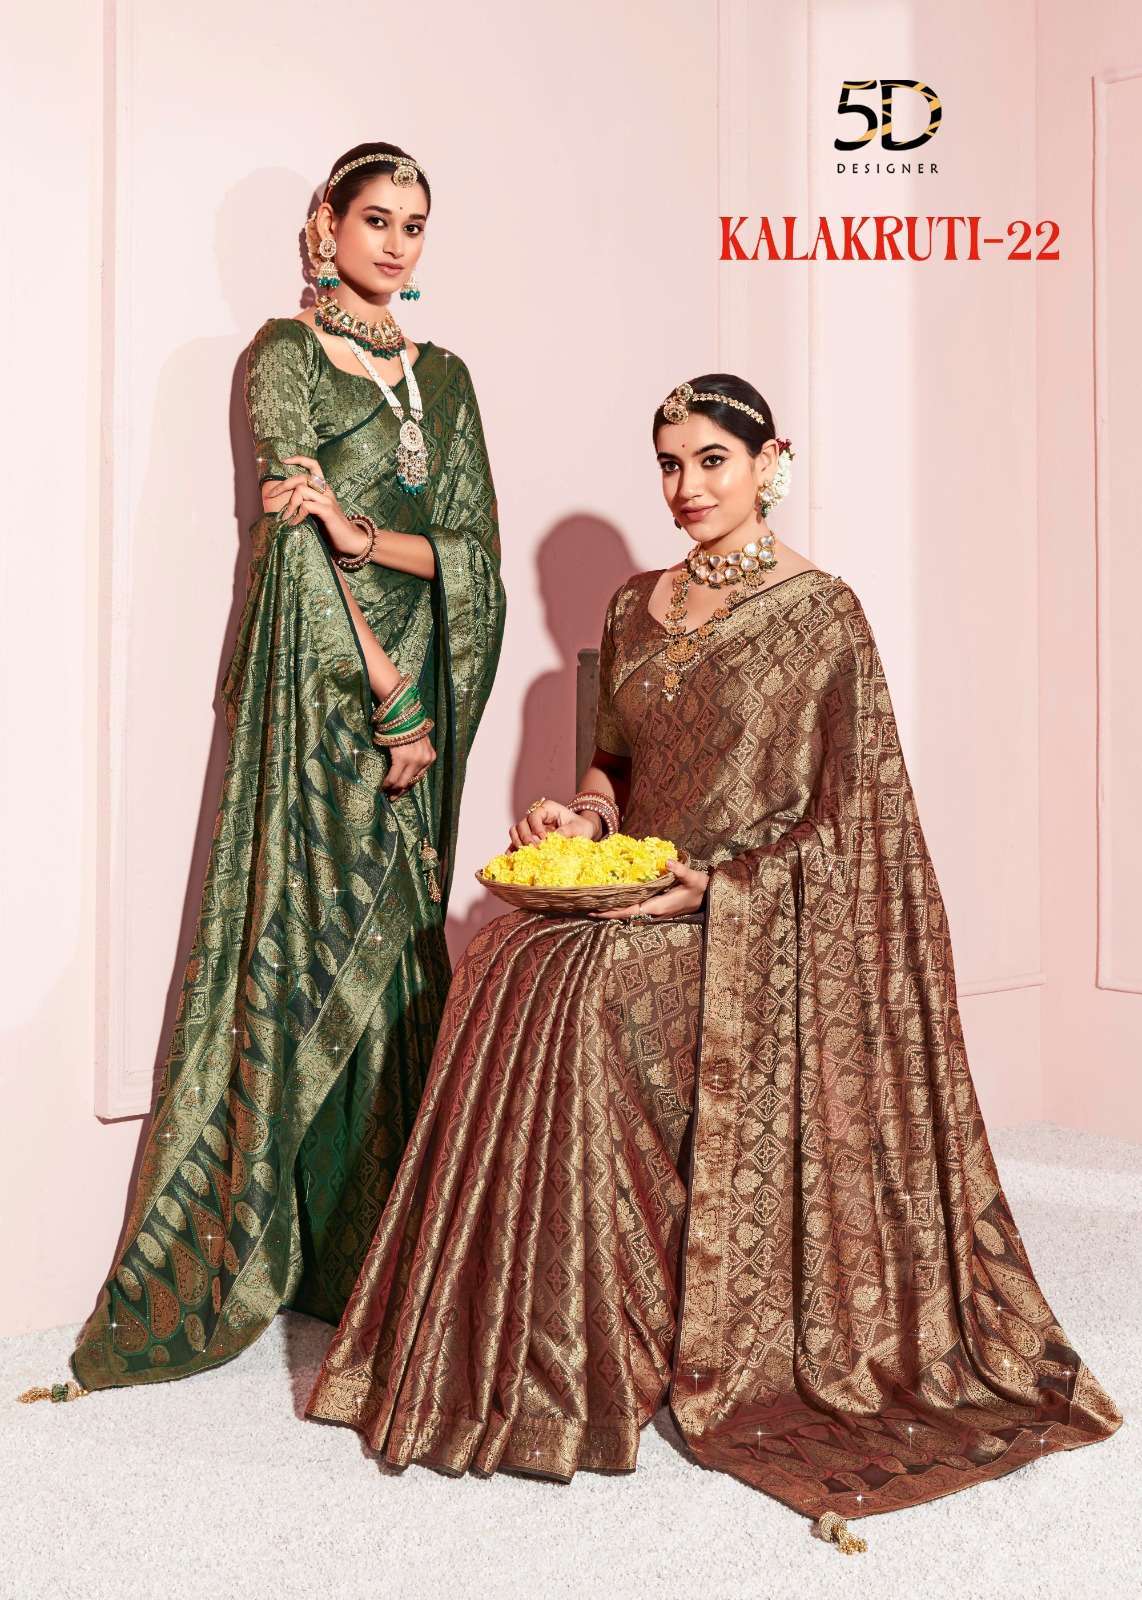 5d designer kalakruti vol 22 series 4131-4134 two tone pure silk saree